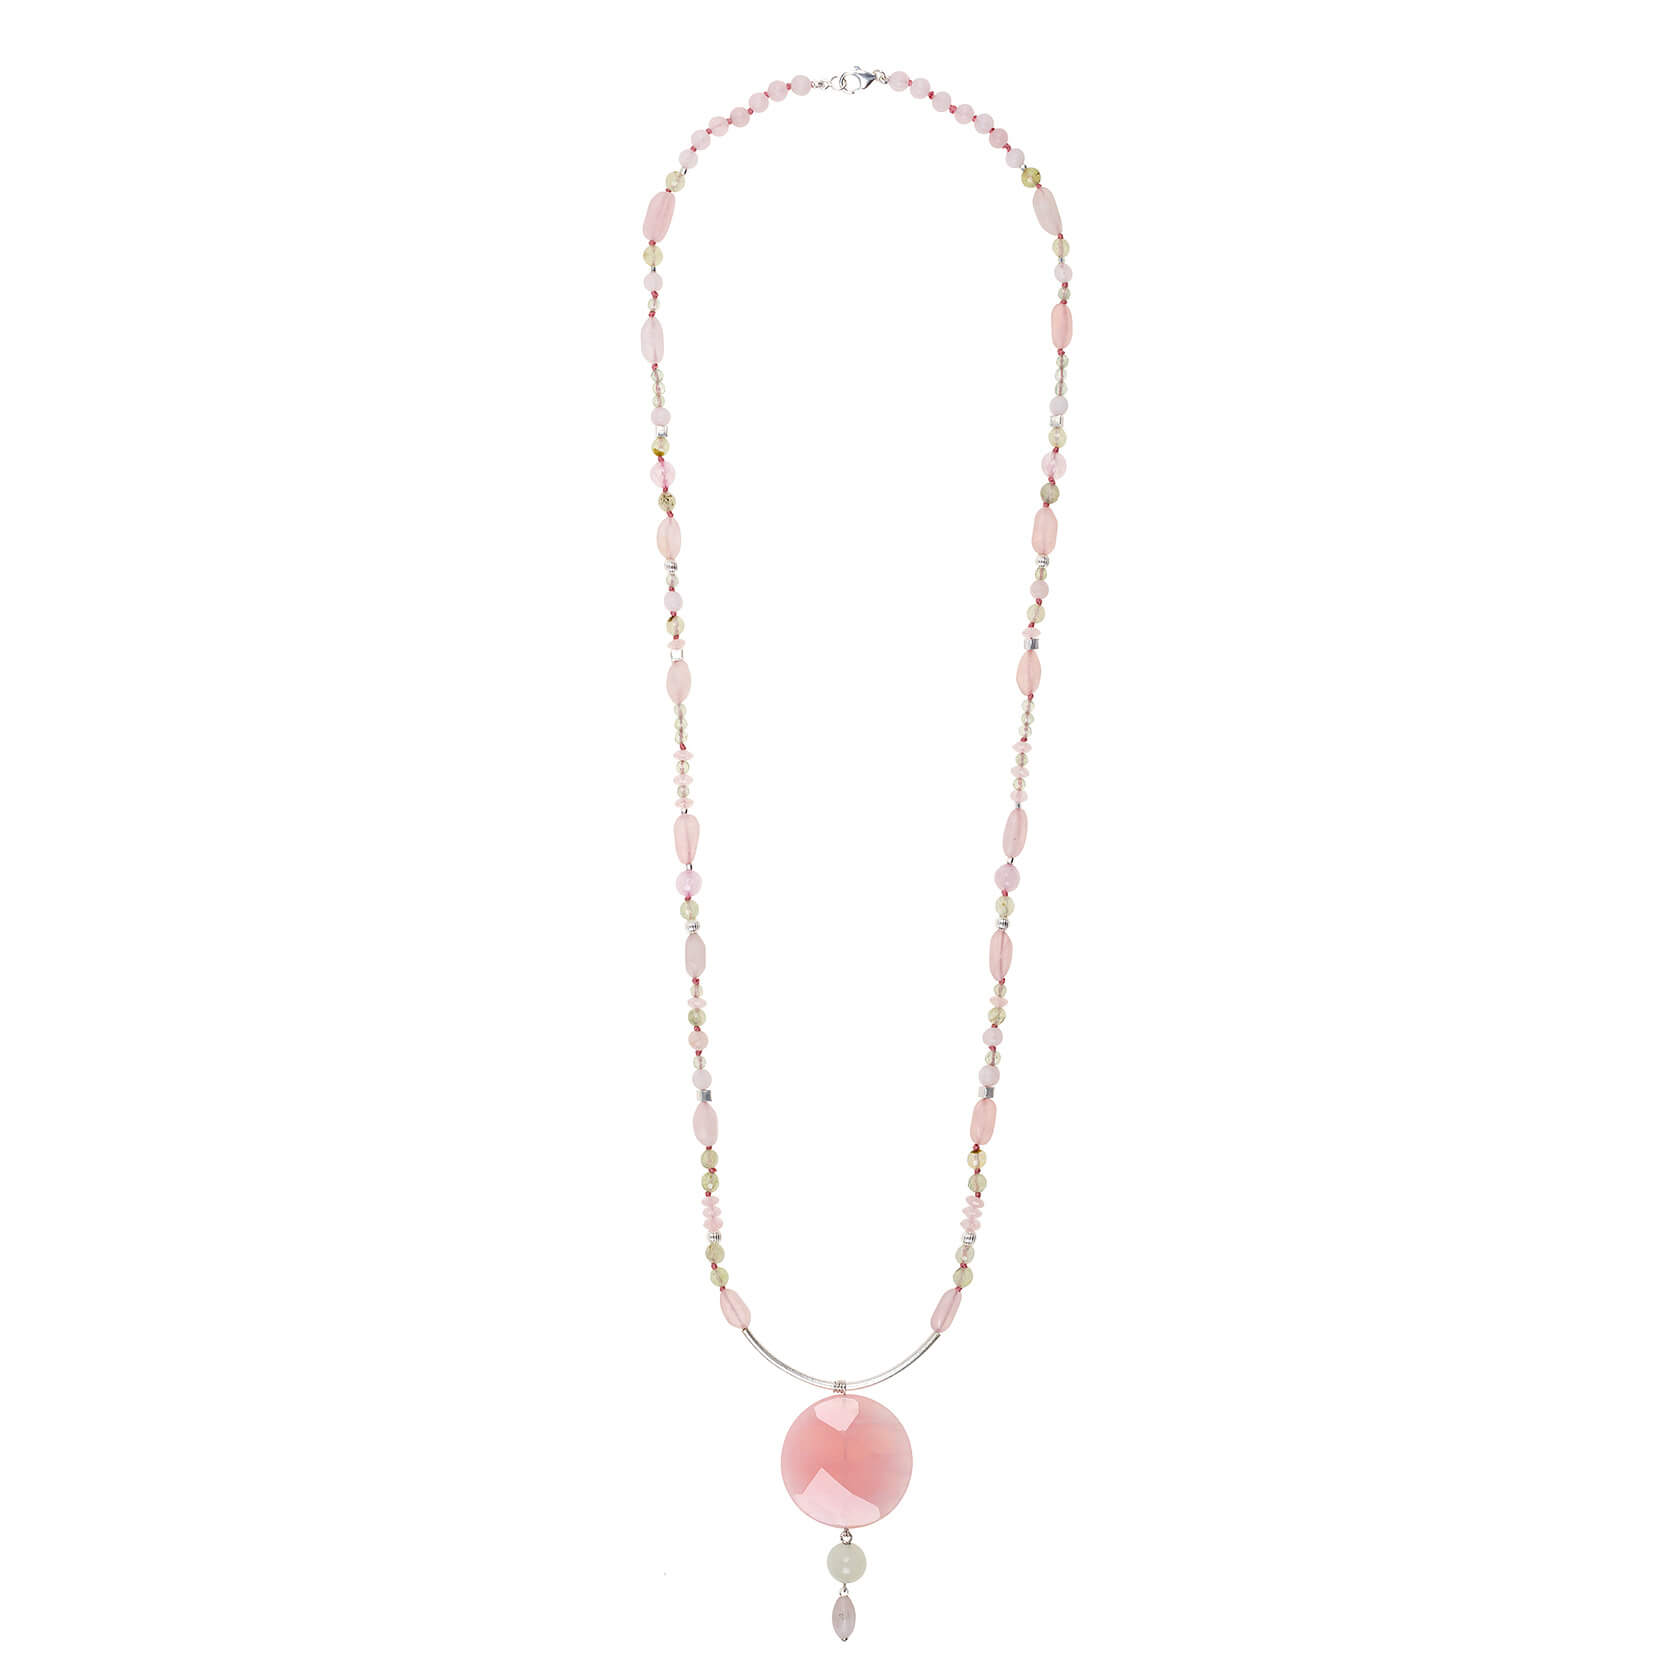 Rose quartz long necklace marybola